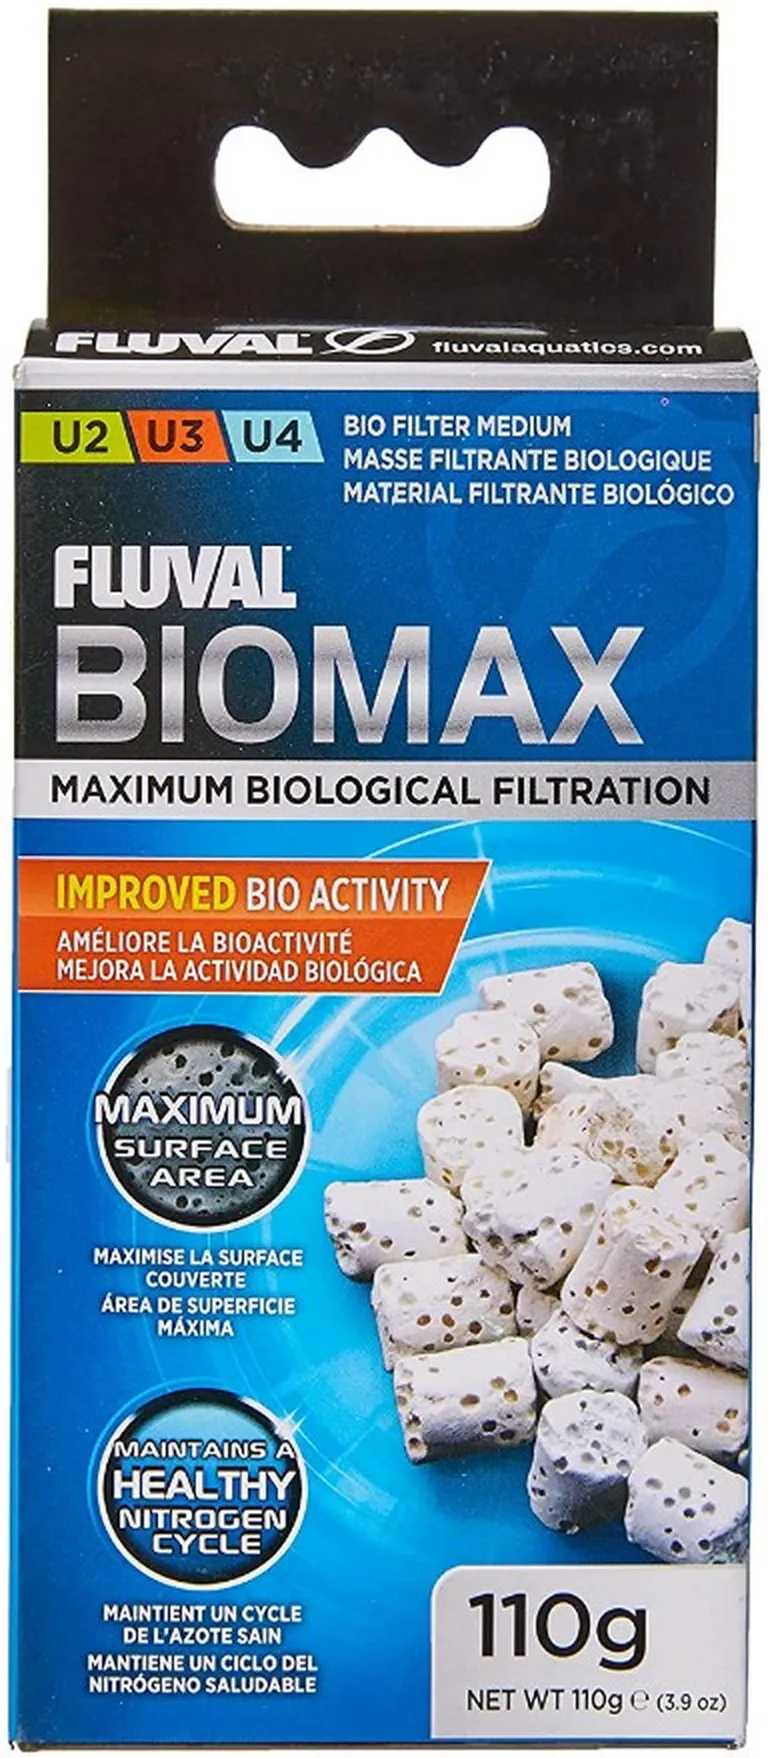 Fluval BioMax Underwater Filter Biological Media Photo 1